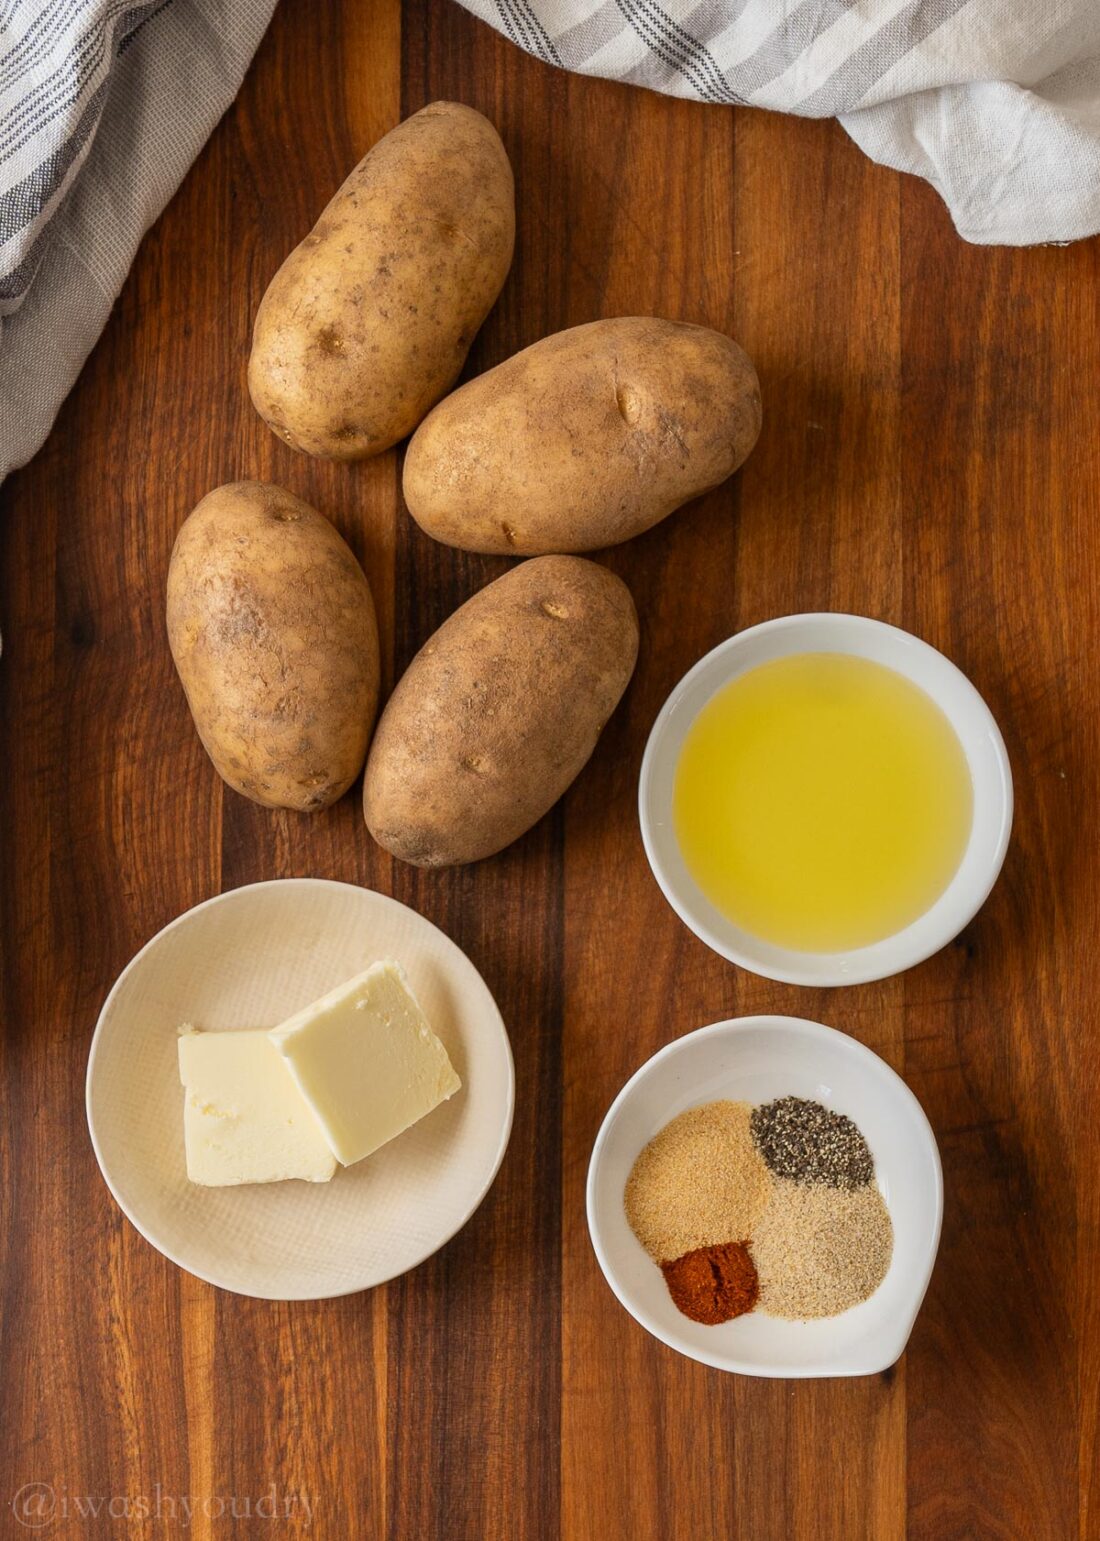 Ingredients for skillet breakfast potatoes on wood cutting board. 